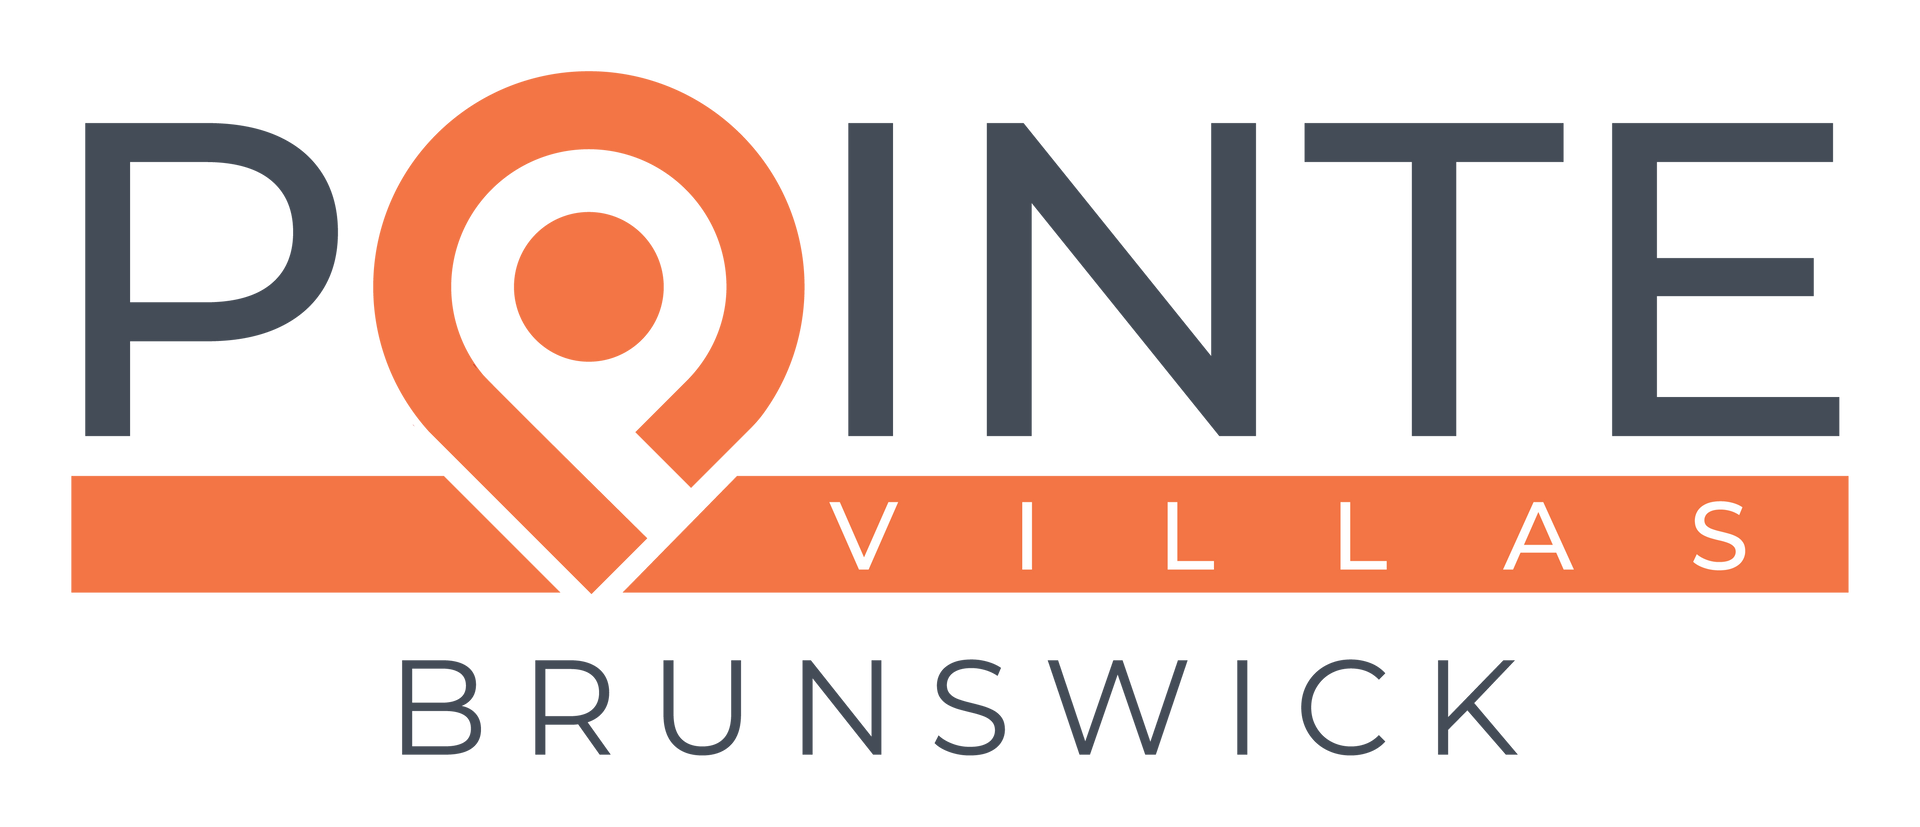 Pointe Villas Brunswick GA Logo #1